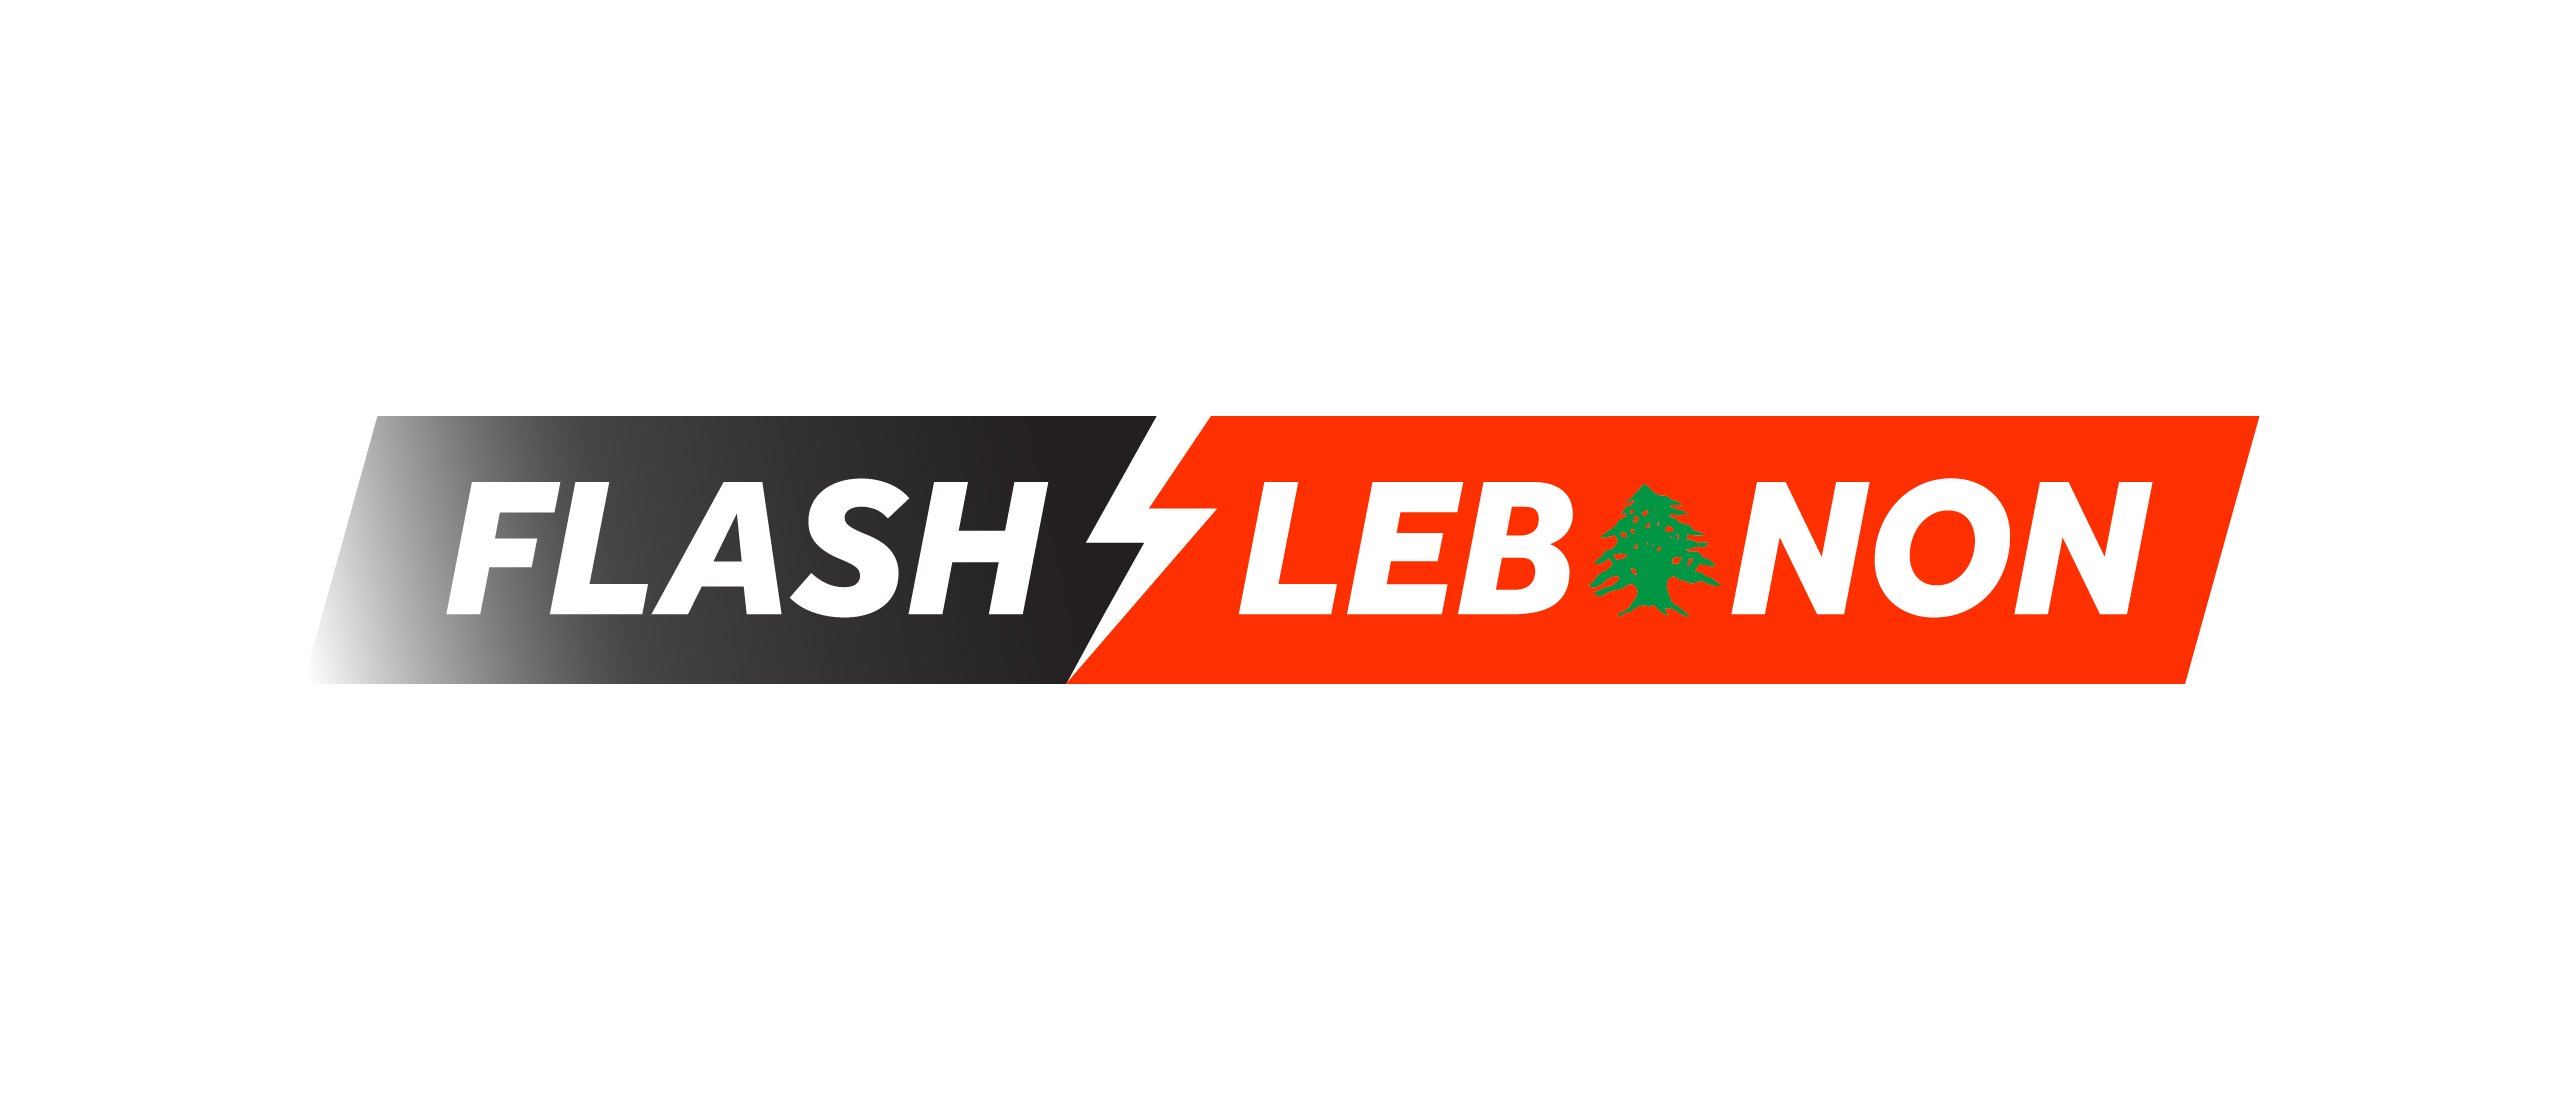 Flash lebanon